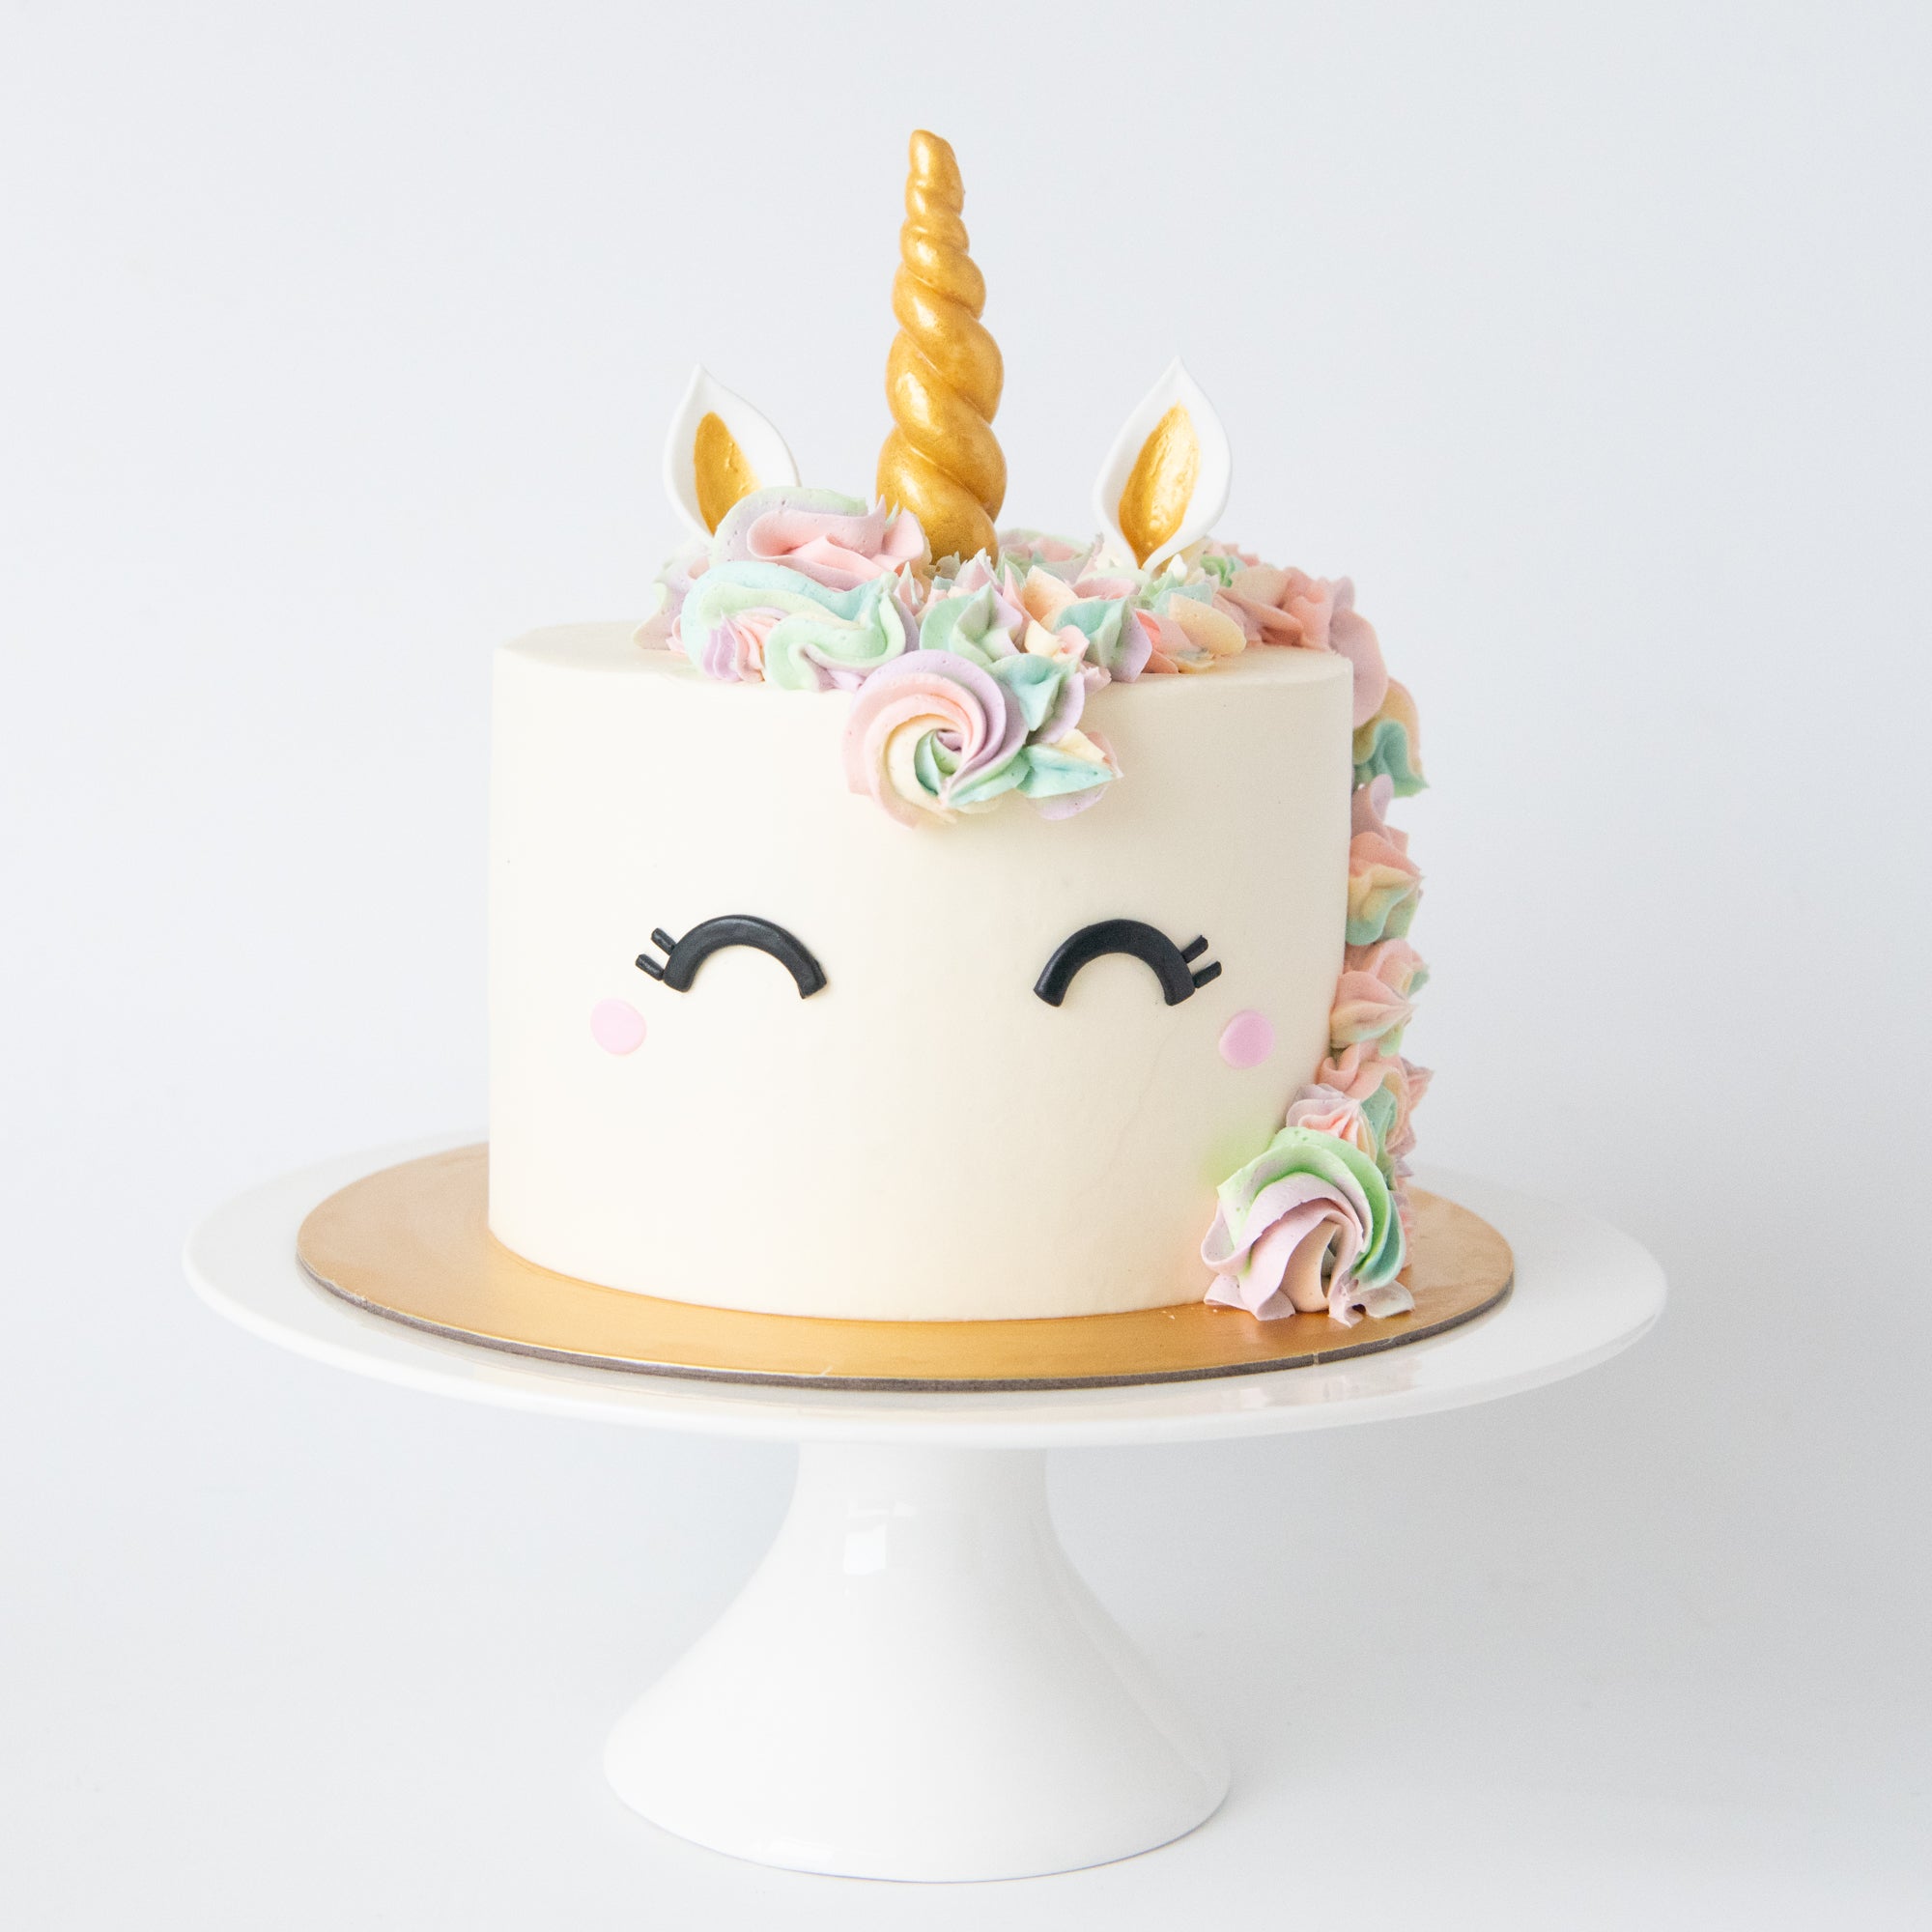 Say Cakes - CASTLE + UNICORN WEDDING CAKE 🏰 🦄 Combining... | Facebook